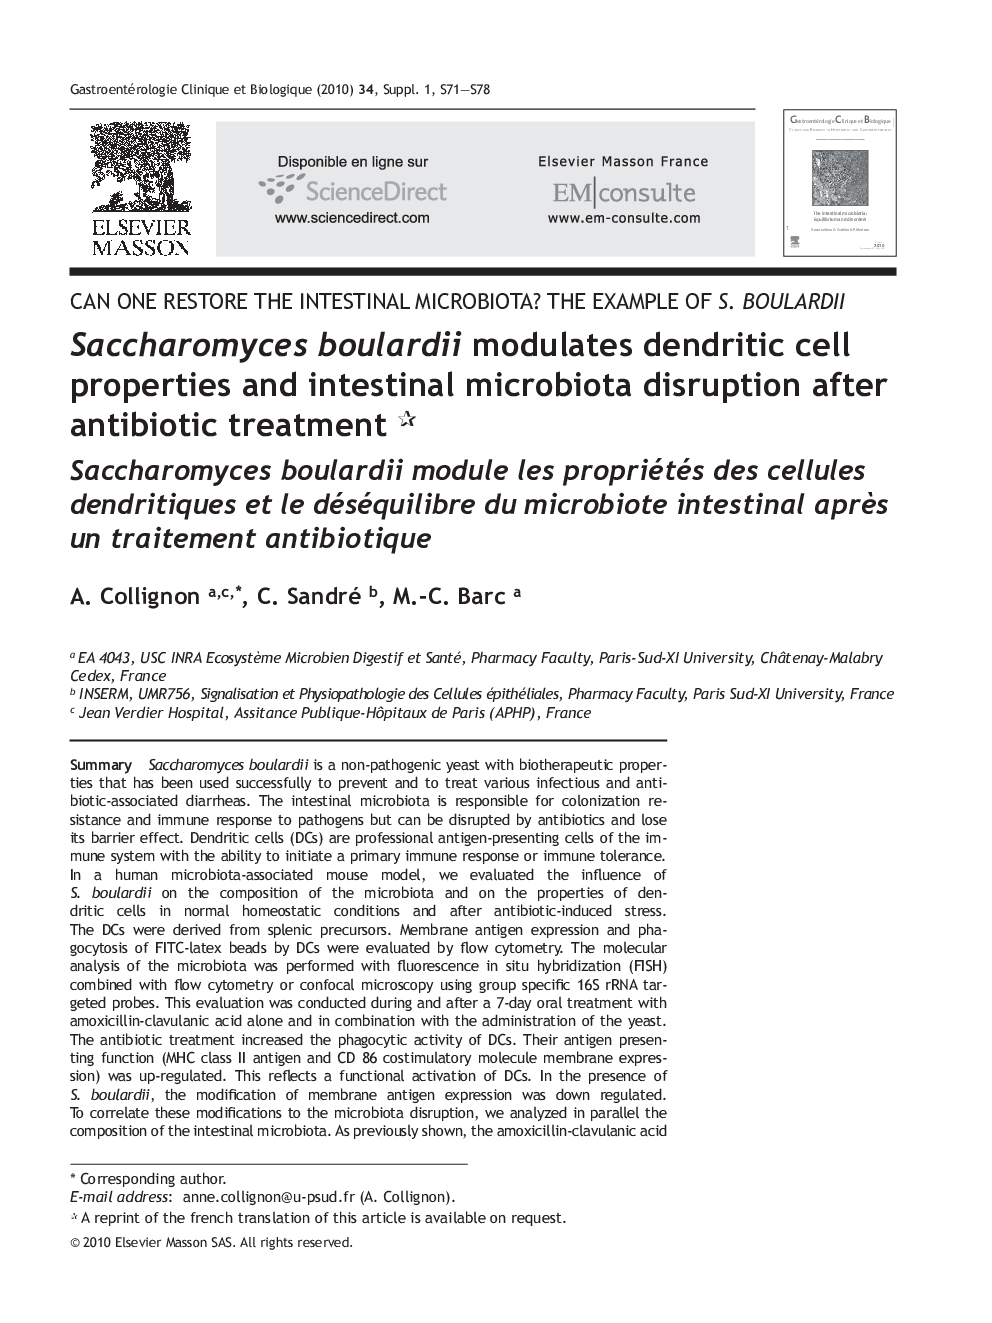 Saccharomyces boulardii modulates dendritic cell properties and intestinal microbiota disruption after antibiotic treatment 